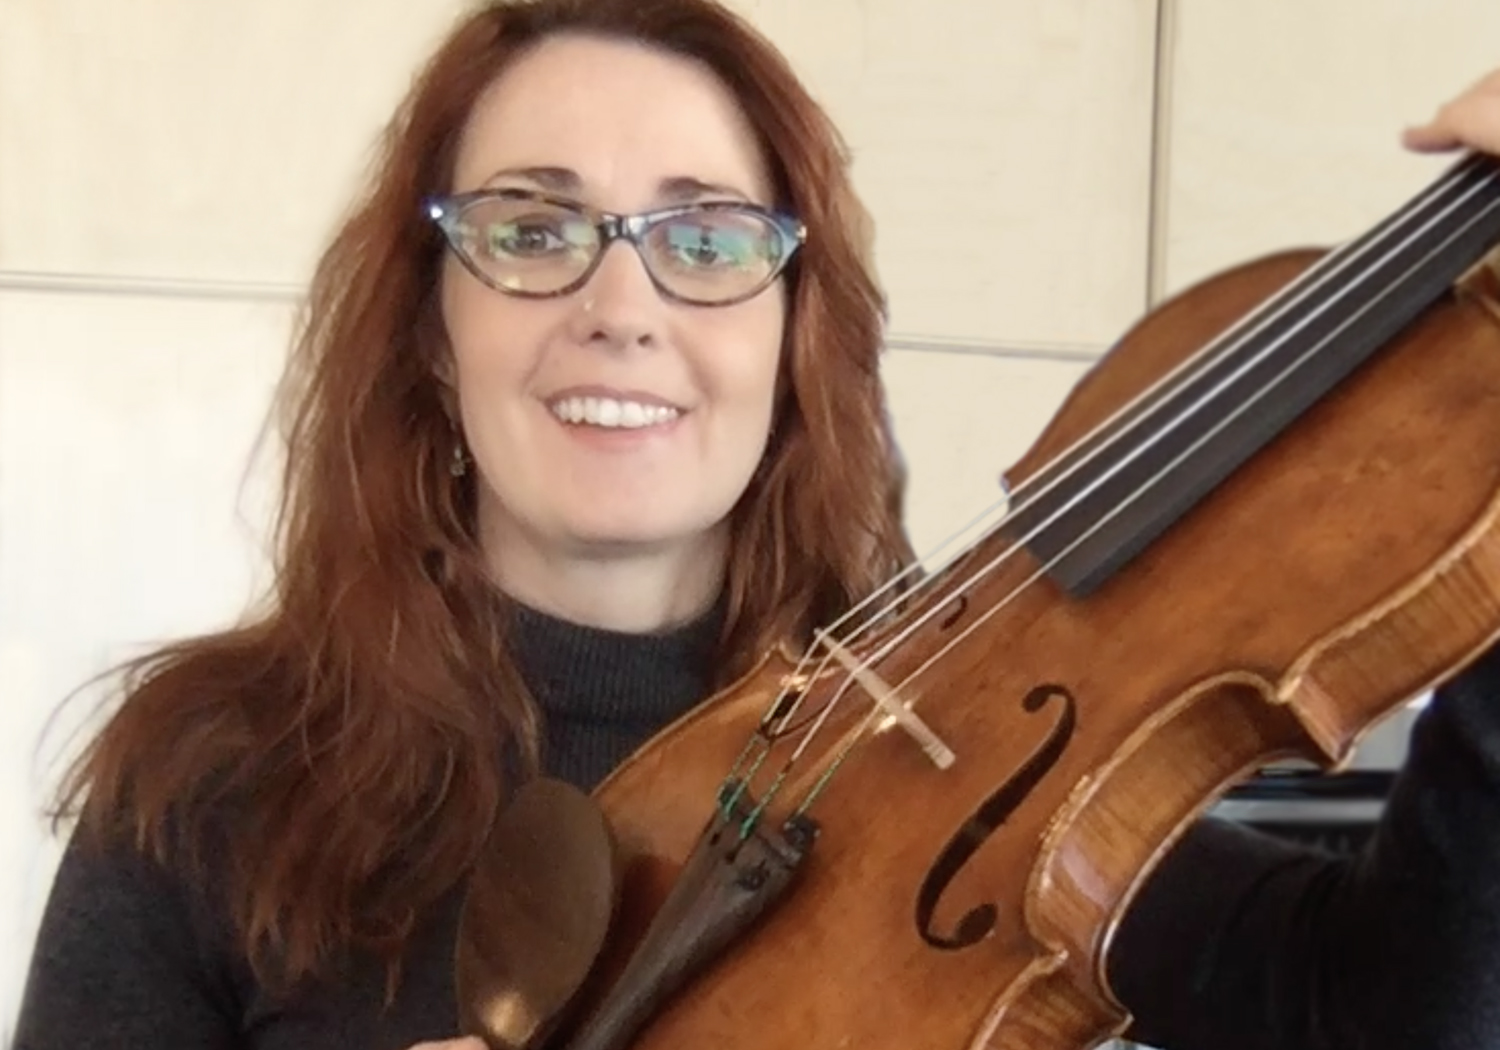 Rhiannon Nachbaur holding up a Violin to the camera